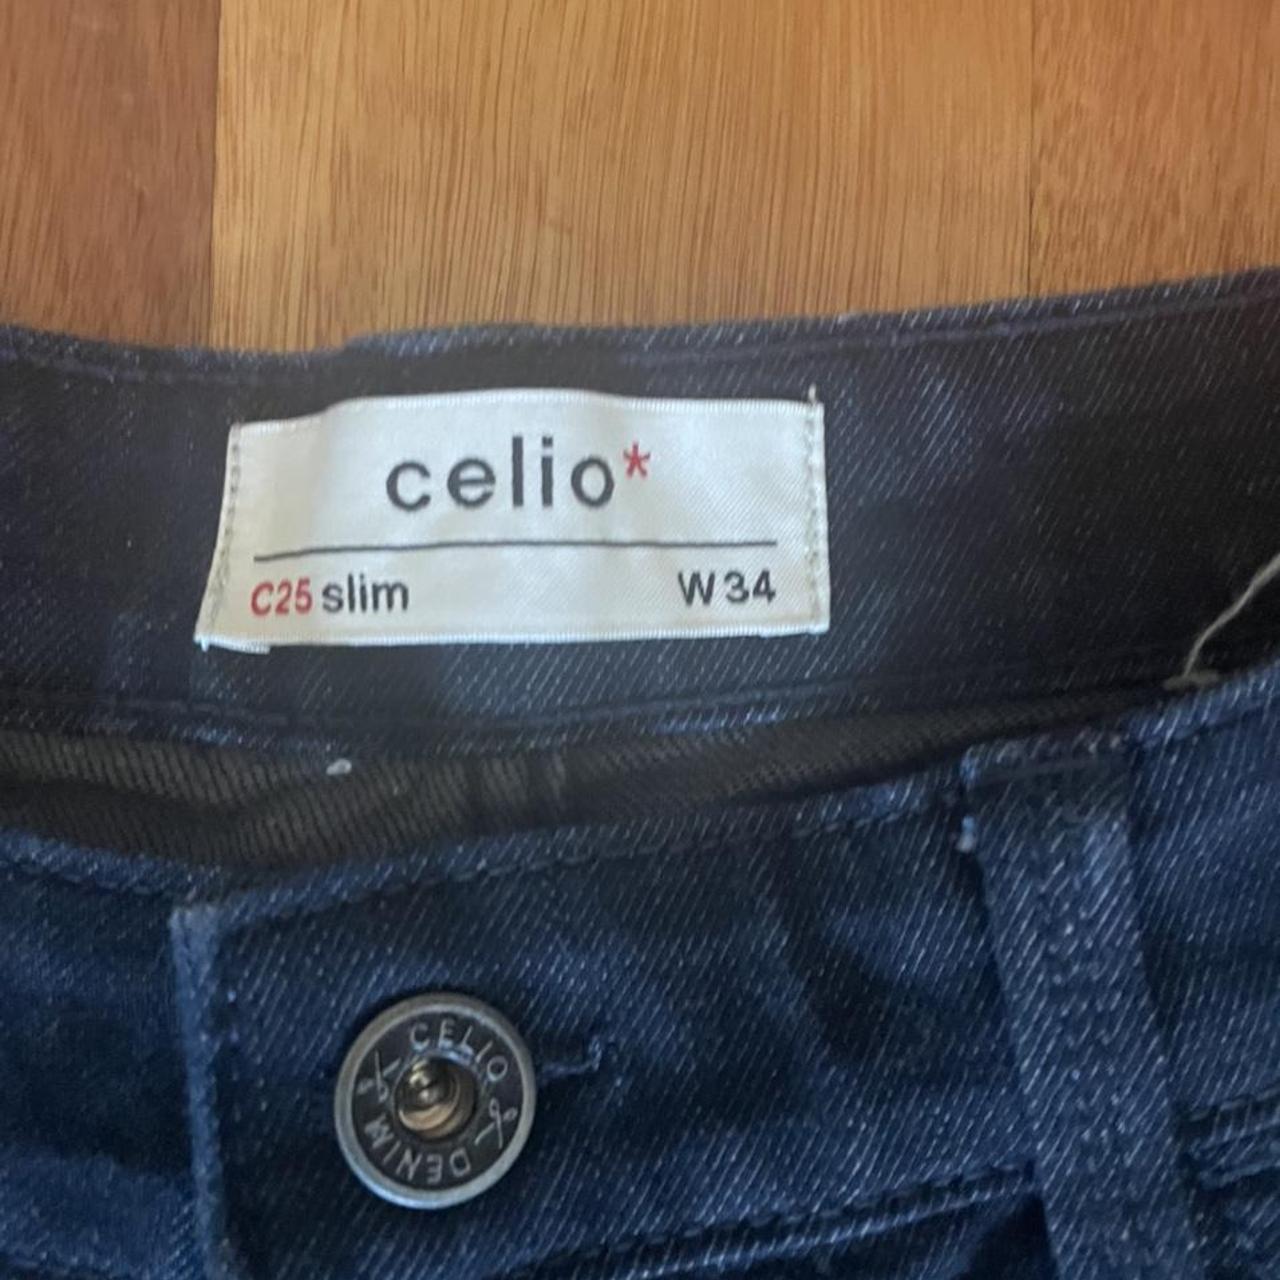 Product Image 3 - Celio Slim Jeans

34x32

Dark blue wash